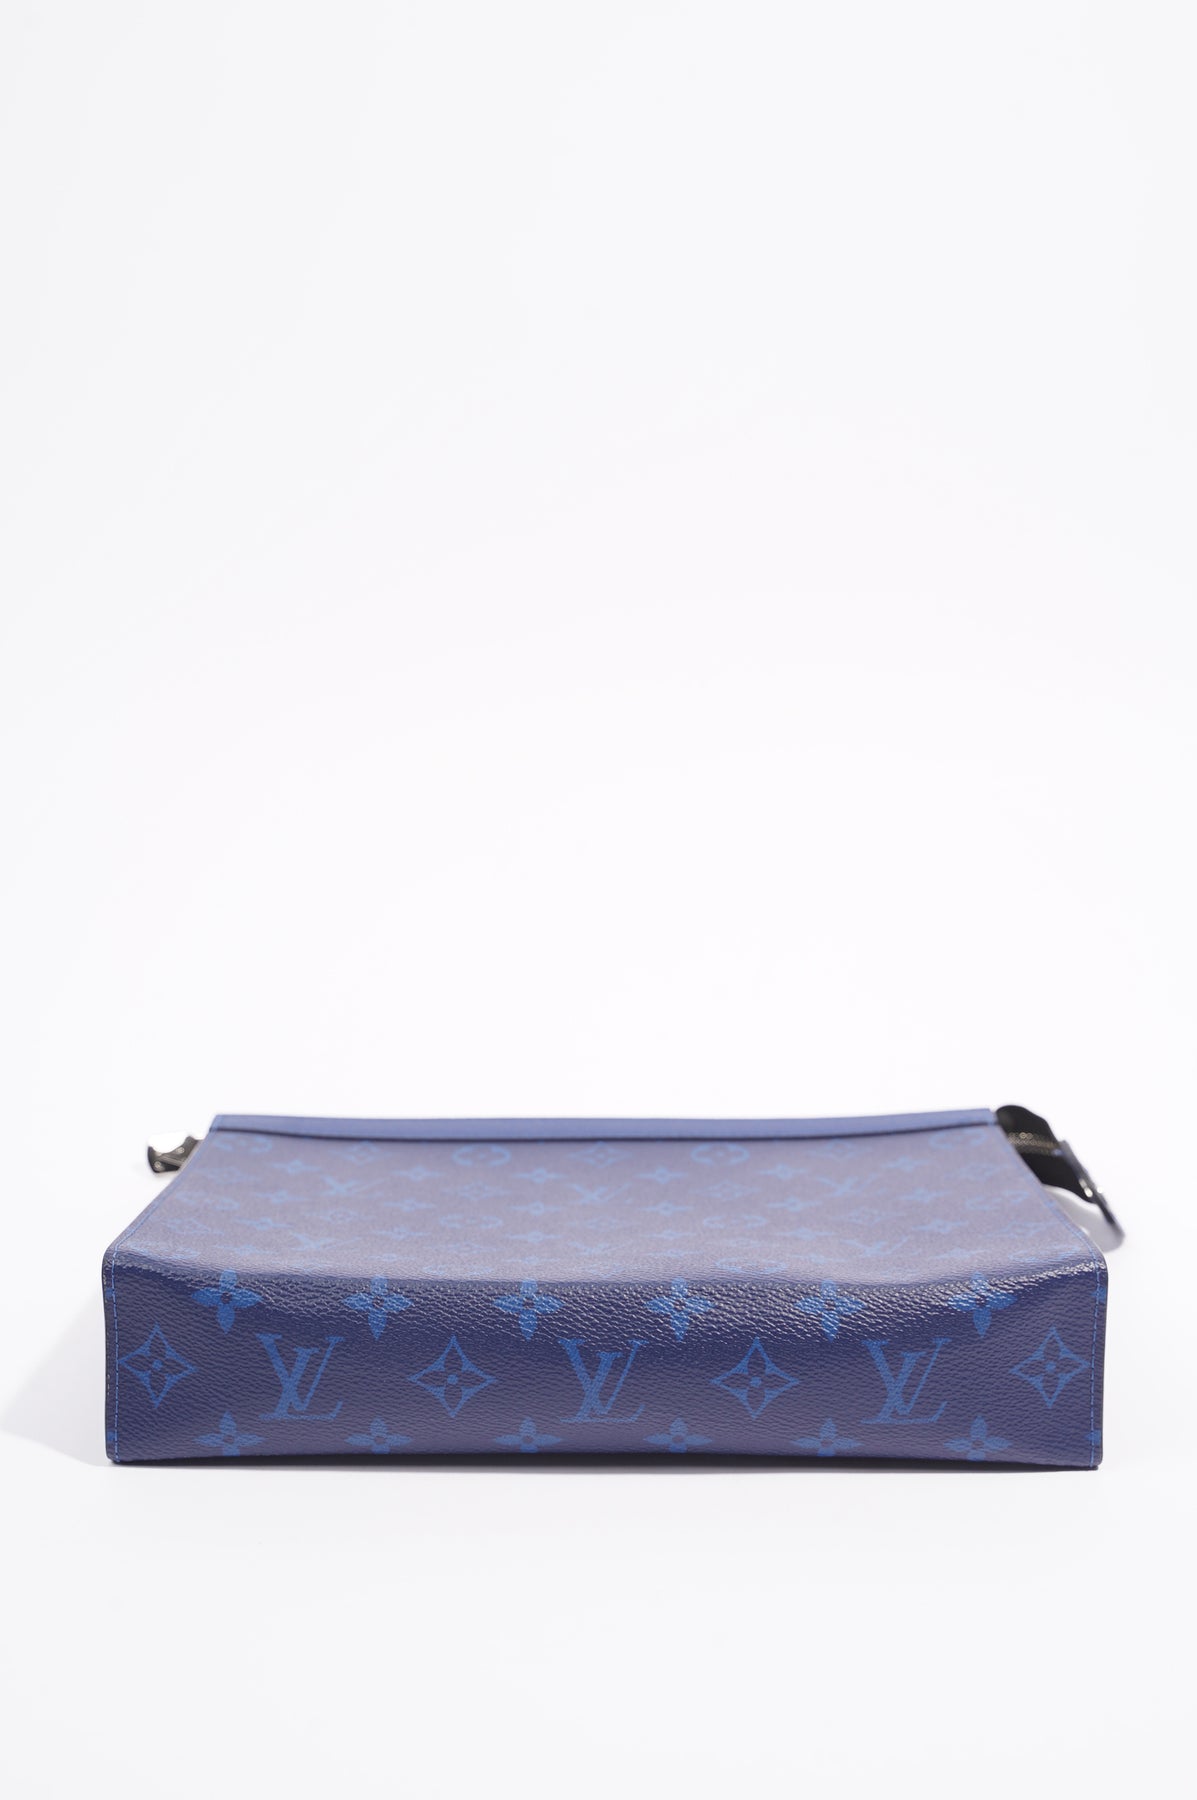 Louis Vuitton Pochette Voyage MM Monogram Bandana Bleached Blue in